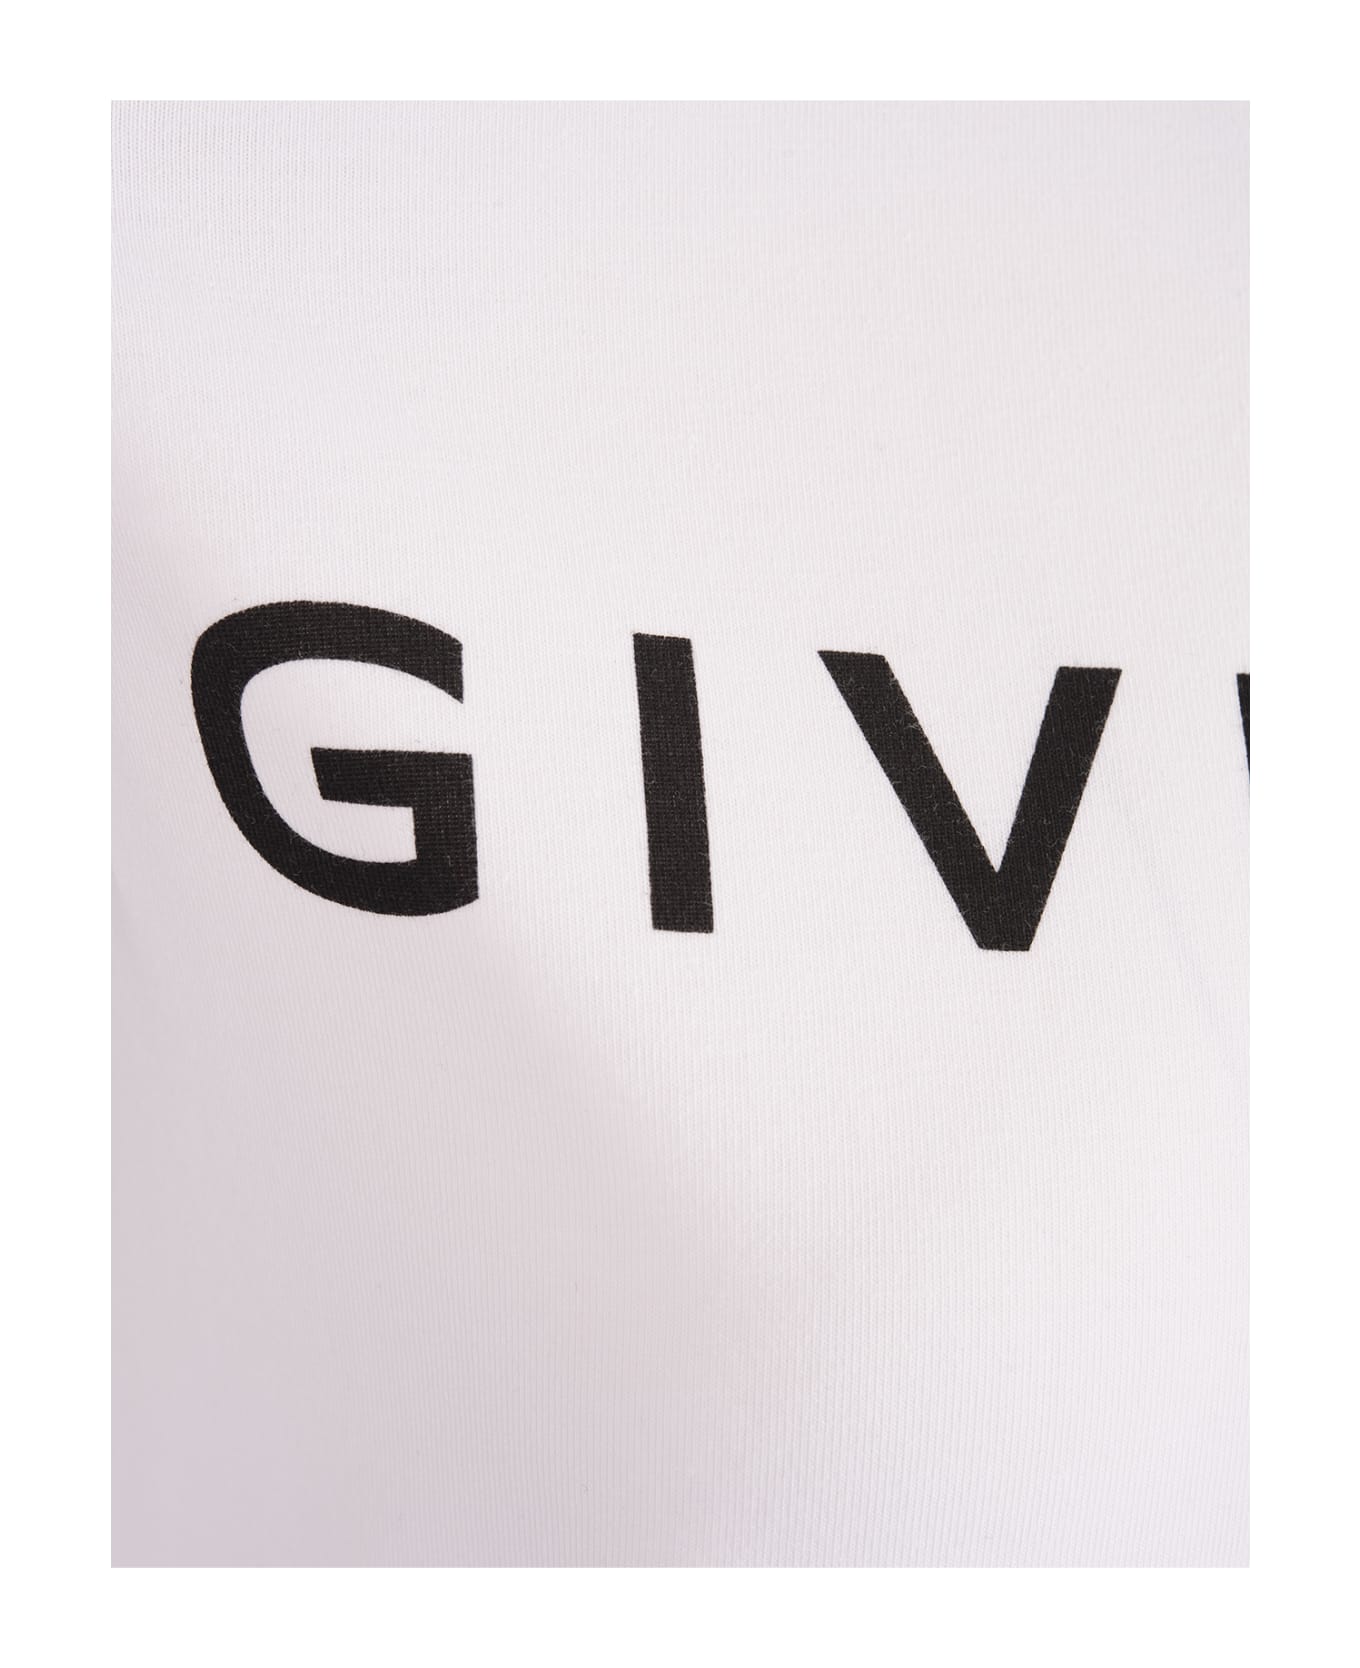 Givenchy Archetype Slim T-shirt In Black/white Cotton - White